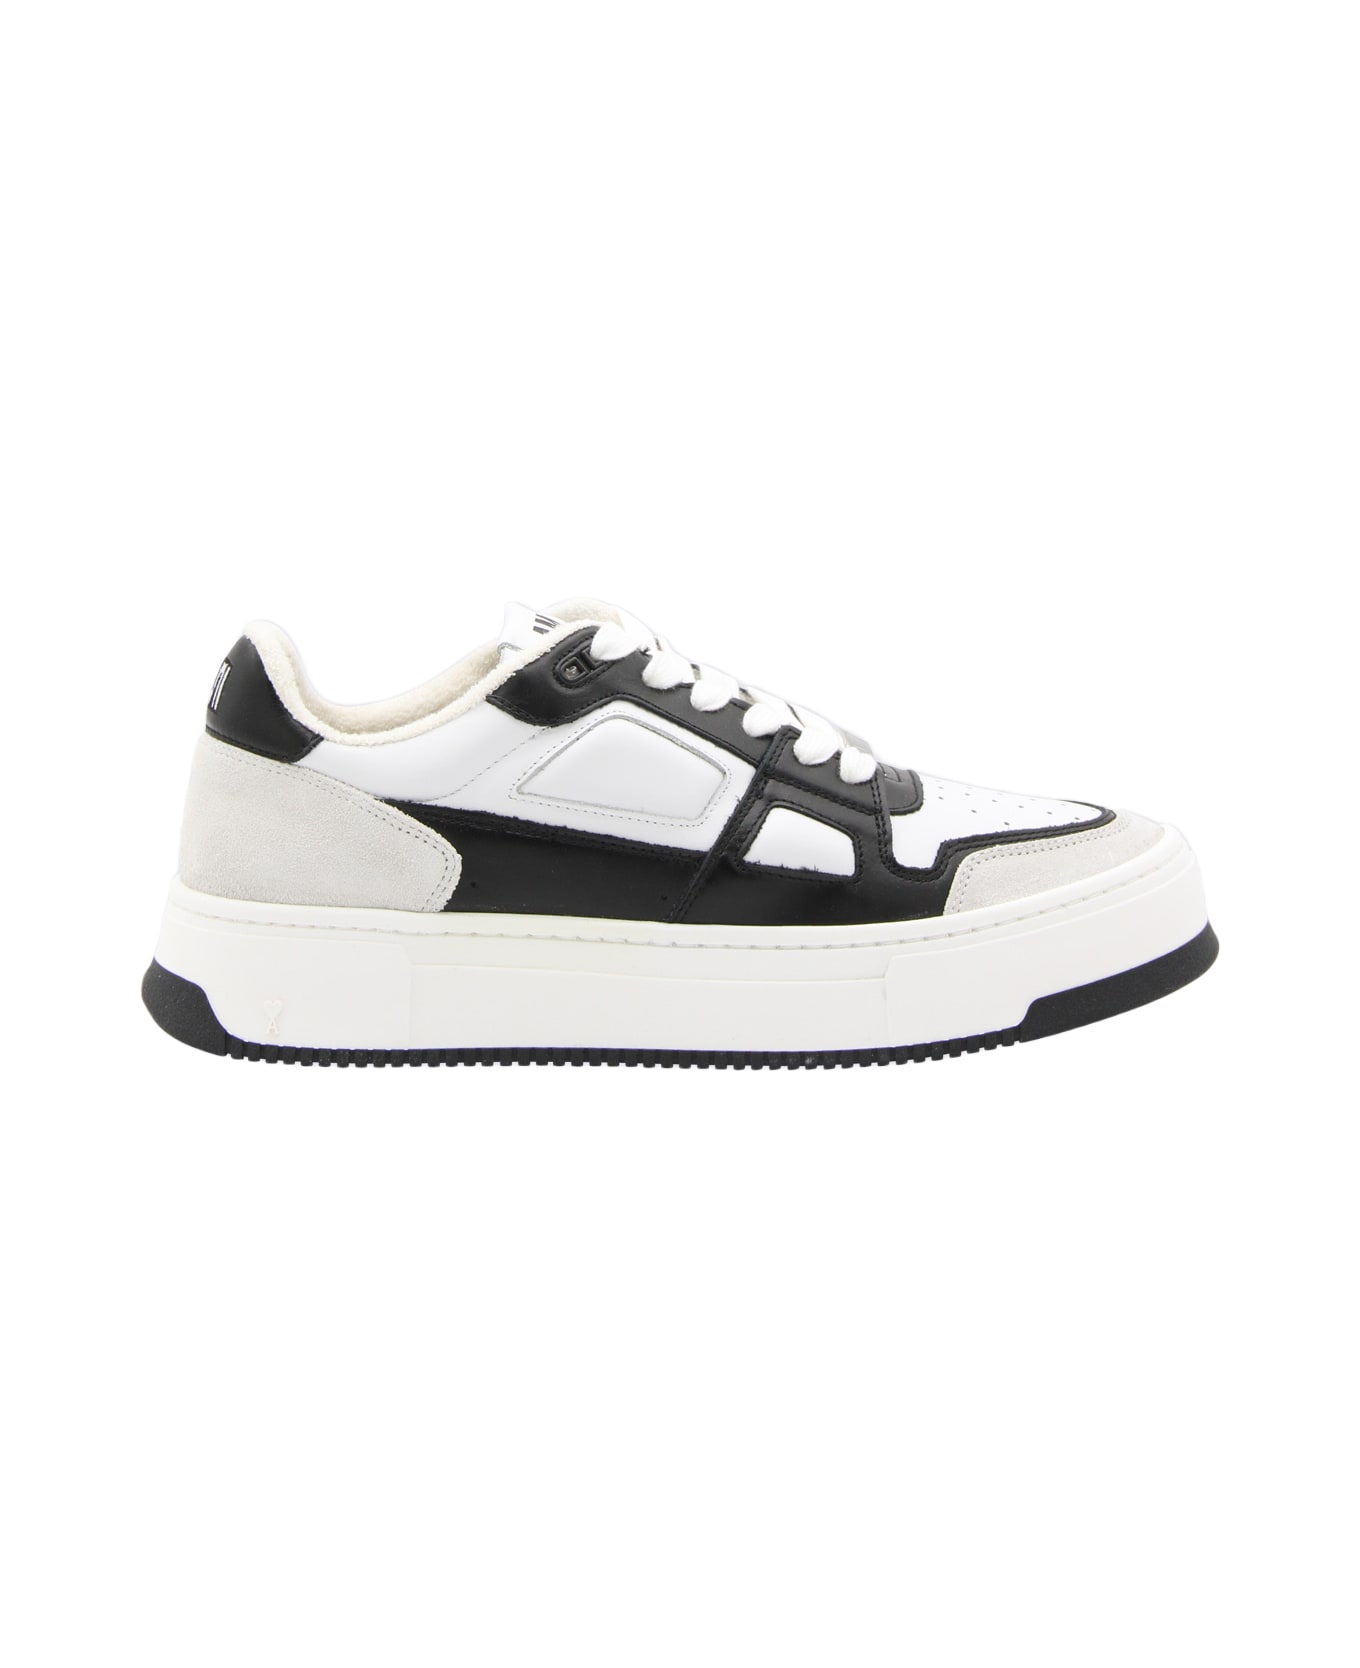 Ami Alexandre Mattiussi Black And White Leather Arcade Sneakers - White スニーカー